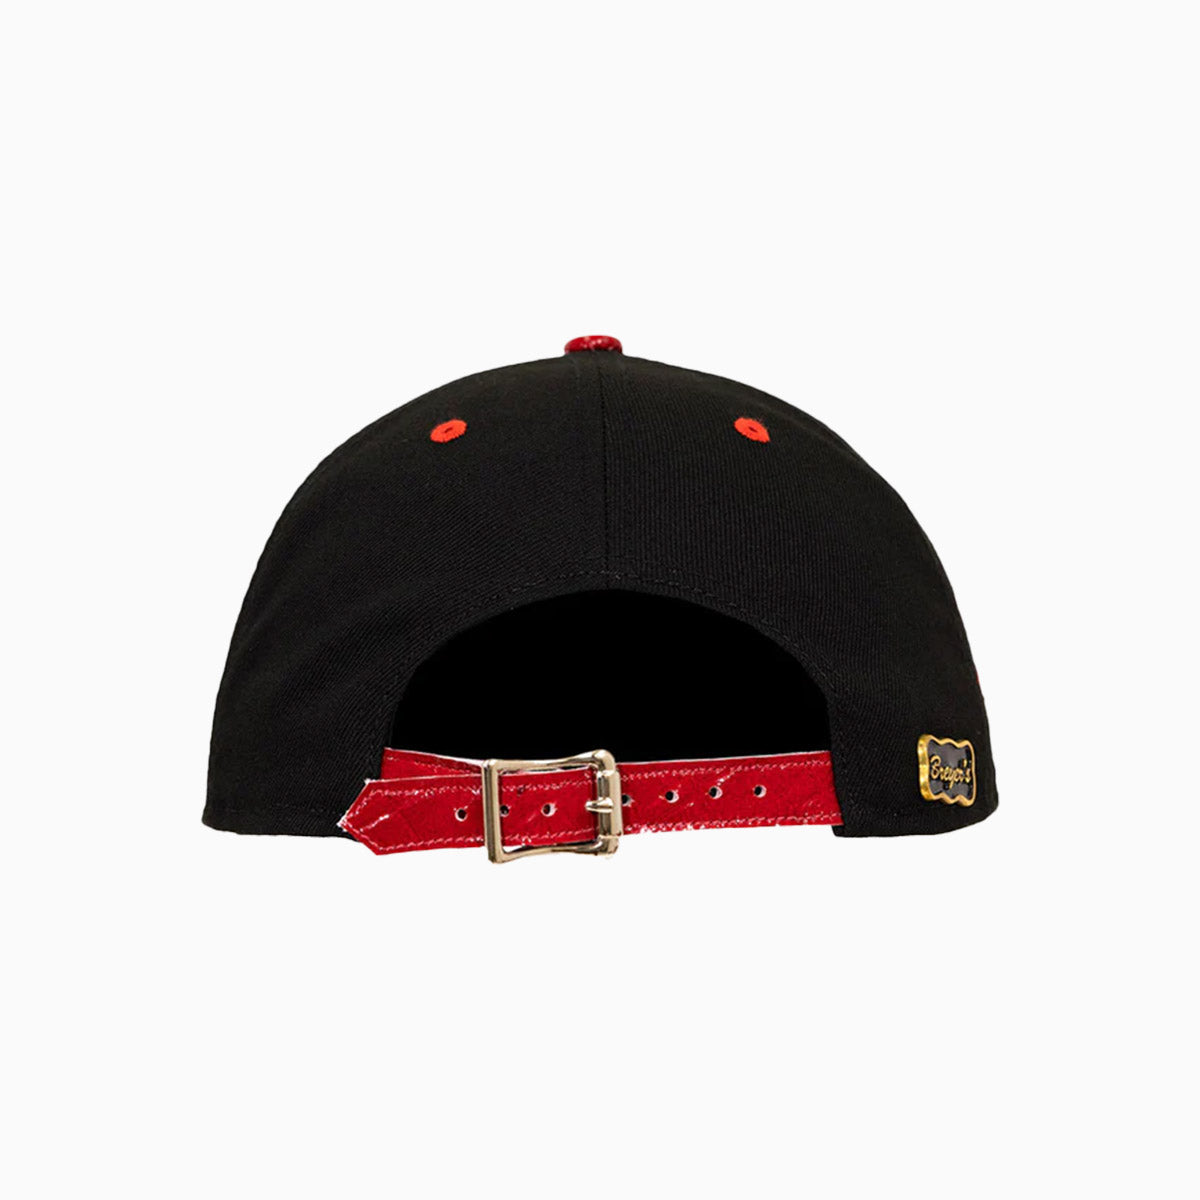 breyers-buck-50-chicago-bulls-hat-with-leather-visor-breyers-tcbh-black-red